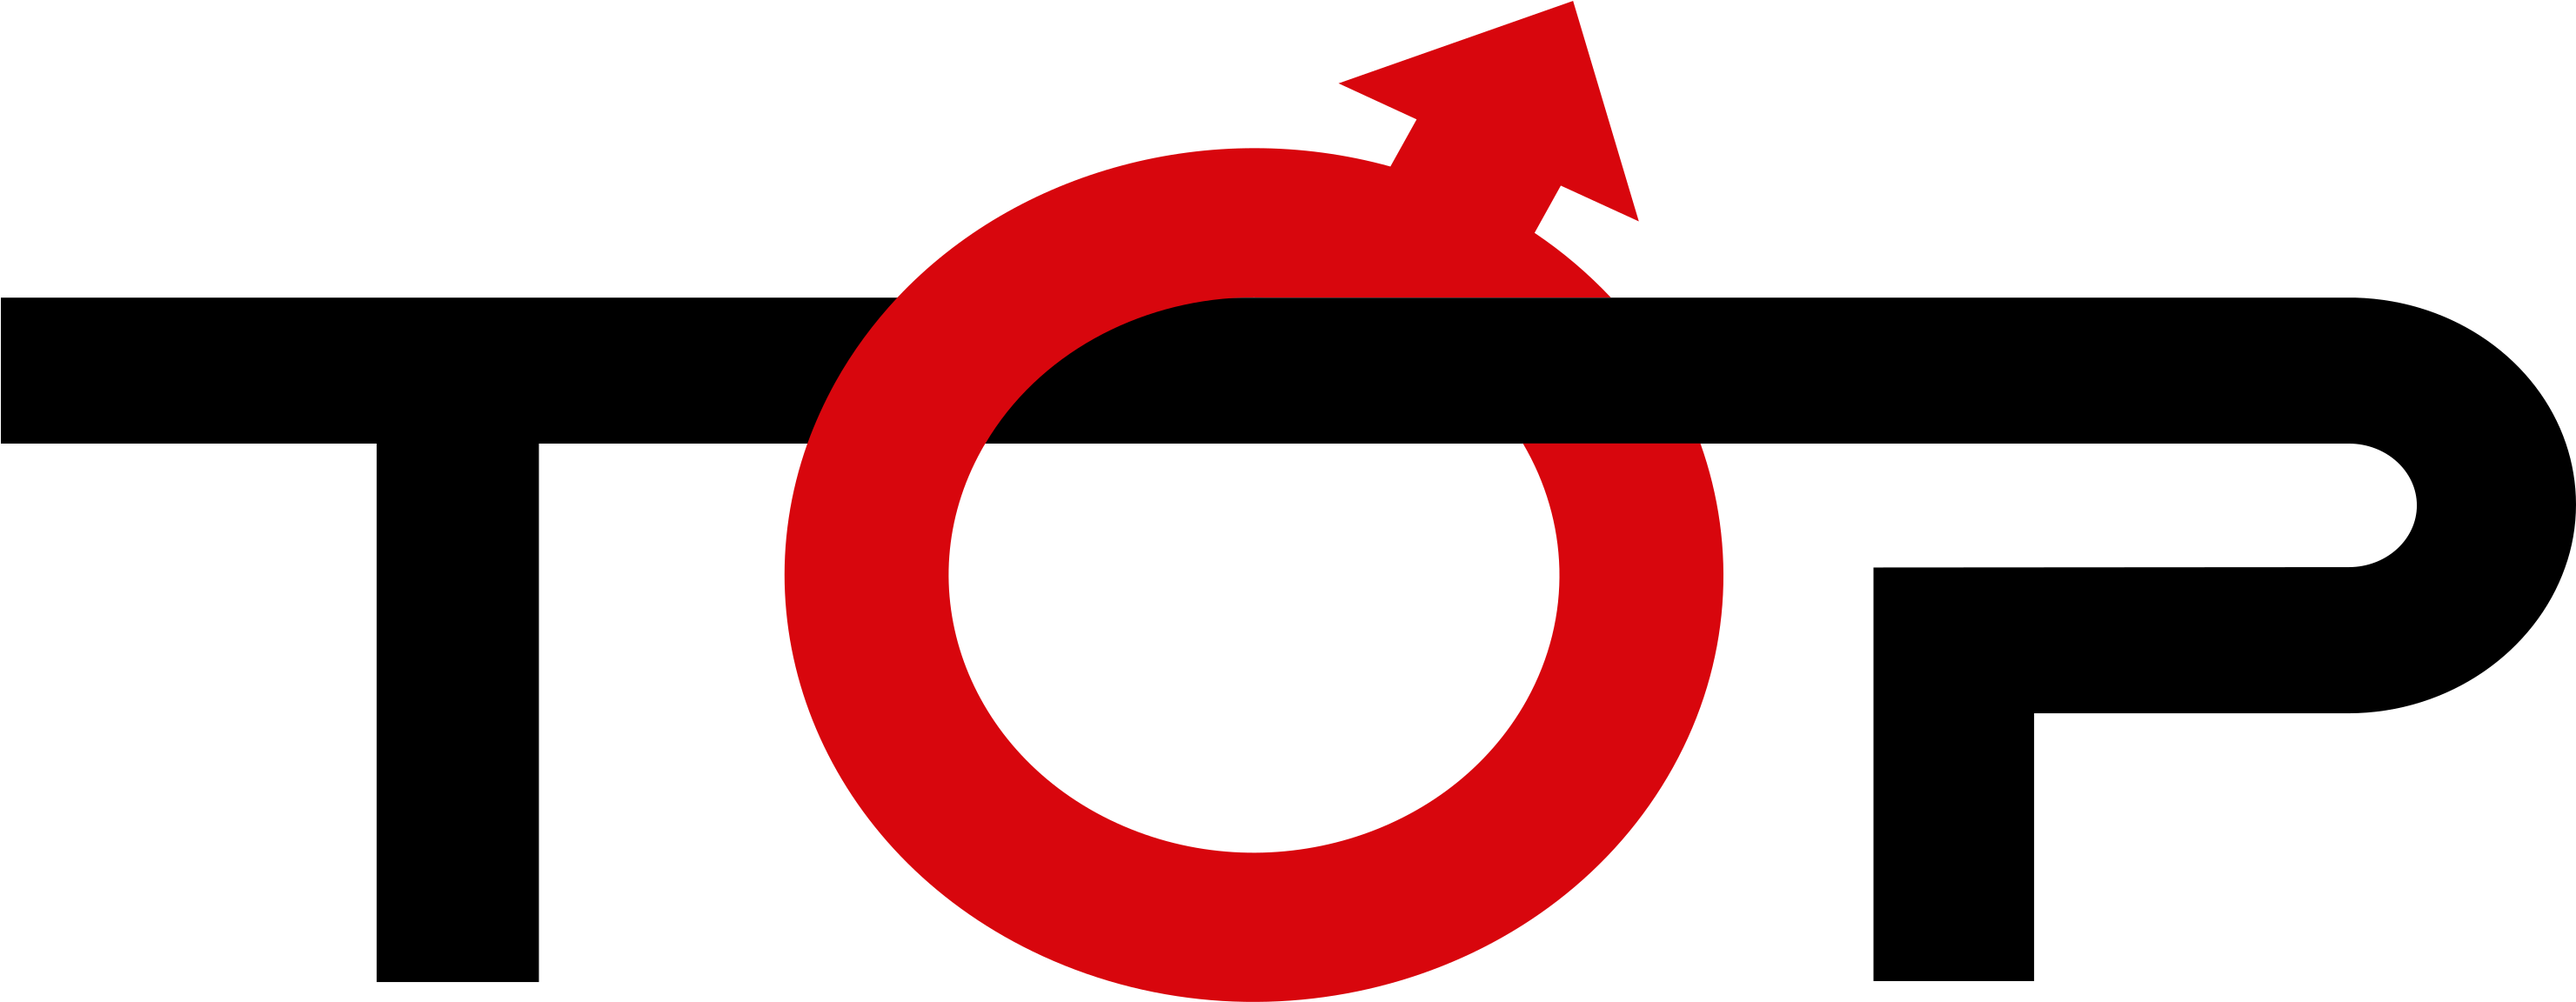 C y ru. Логотип Top. Top point логотип. 32 Топ лого. TOPBOOM логотип.